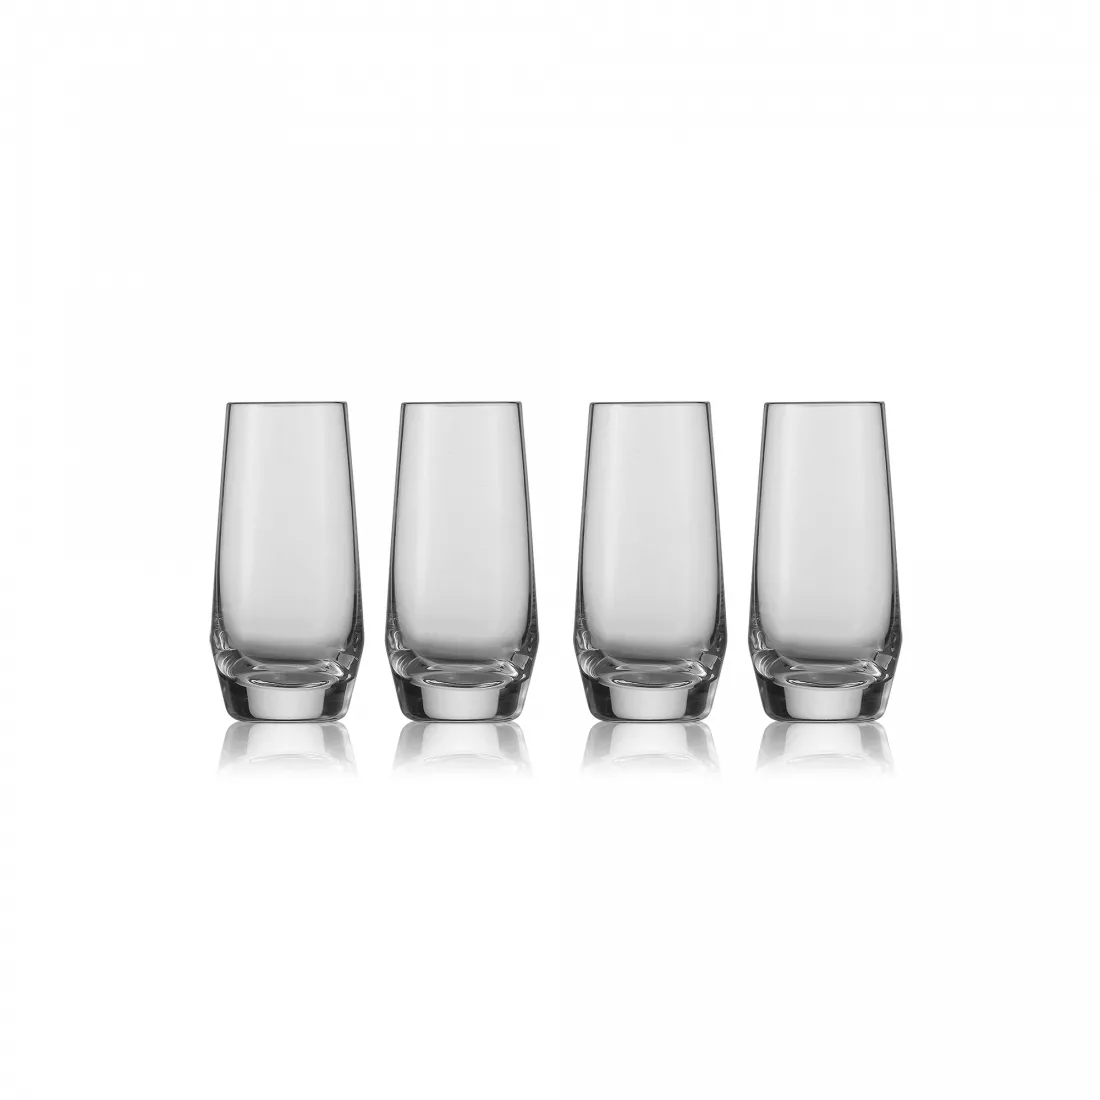 ZWIESEL GLAS Набор стопок для водки, объем 94 мл, 4 шт, серия Pure